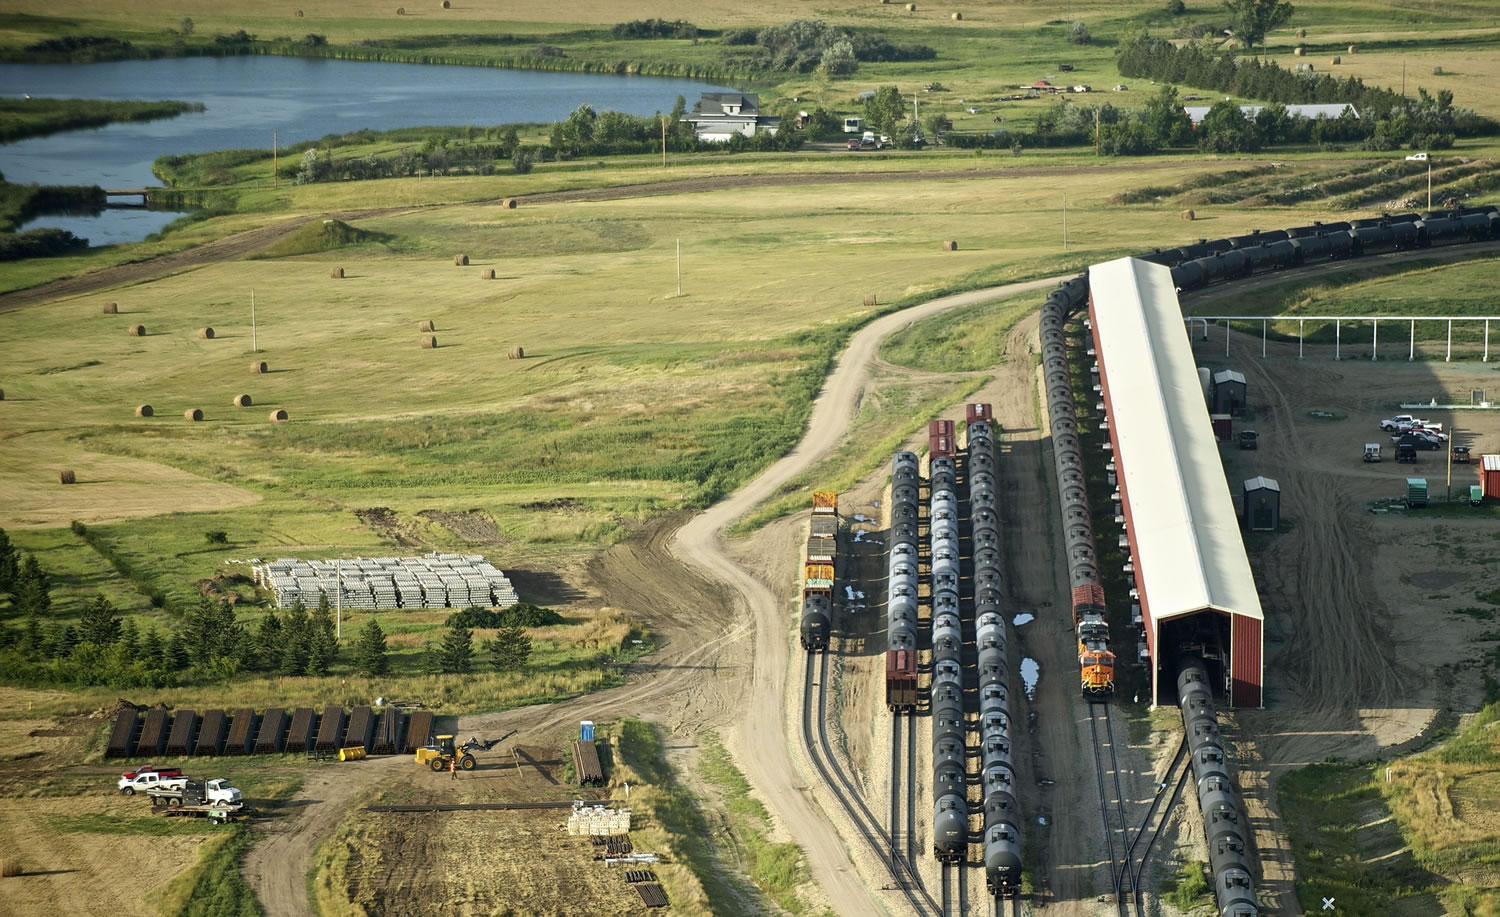 The Rangeland Energy rail facility in Epping, North Dakota, on Friday, August 1, 2014.